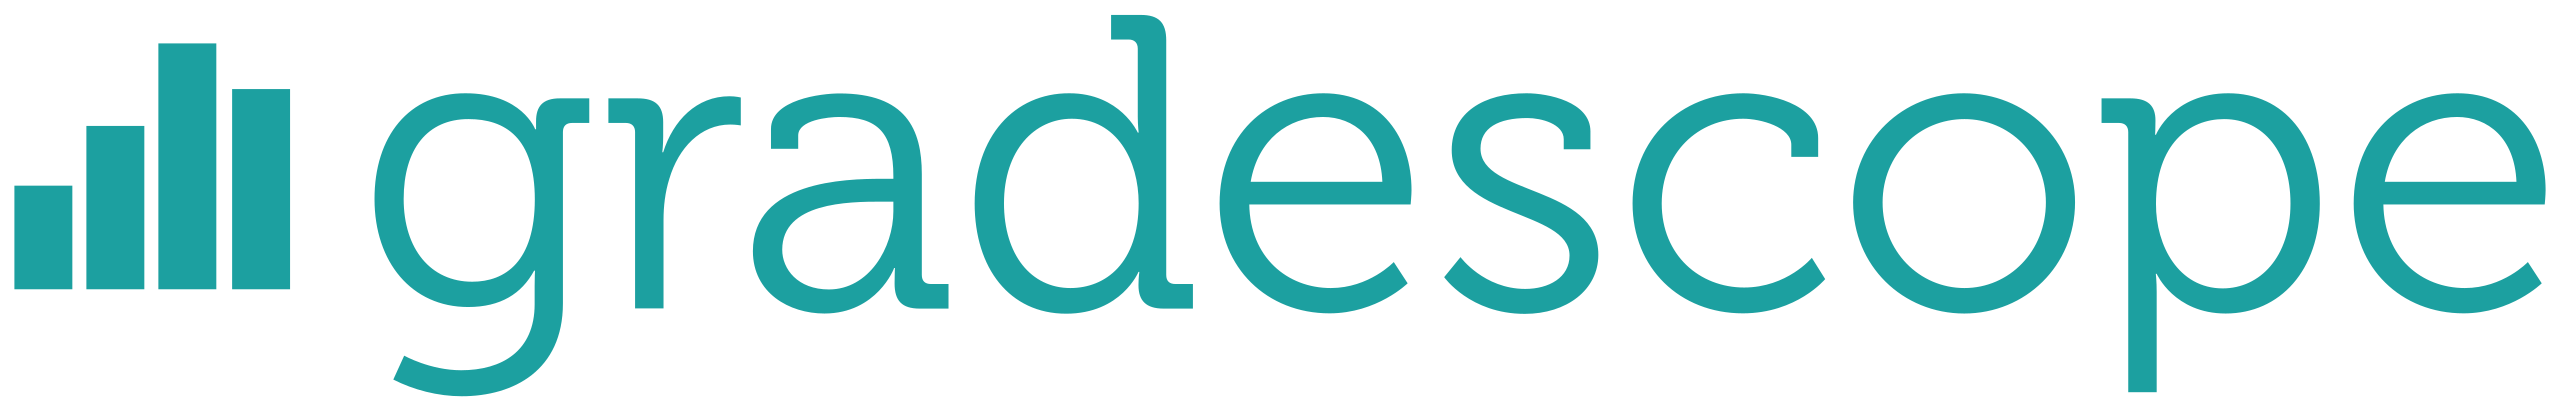 Gradescope logo